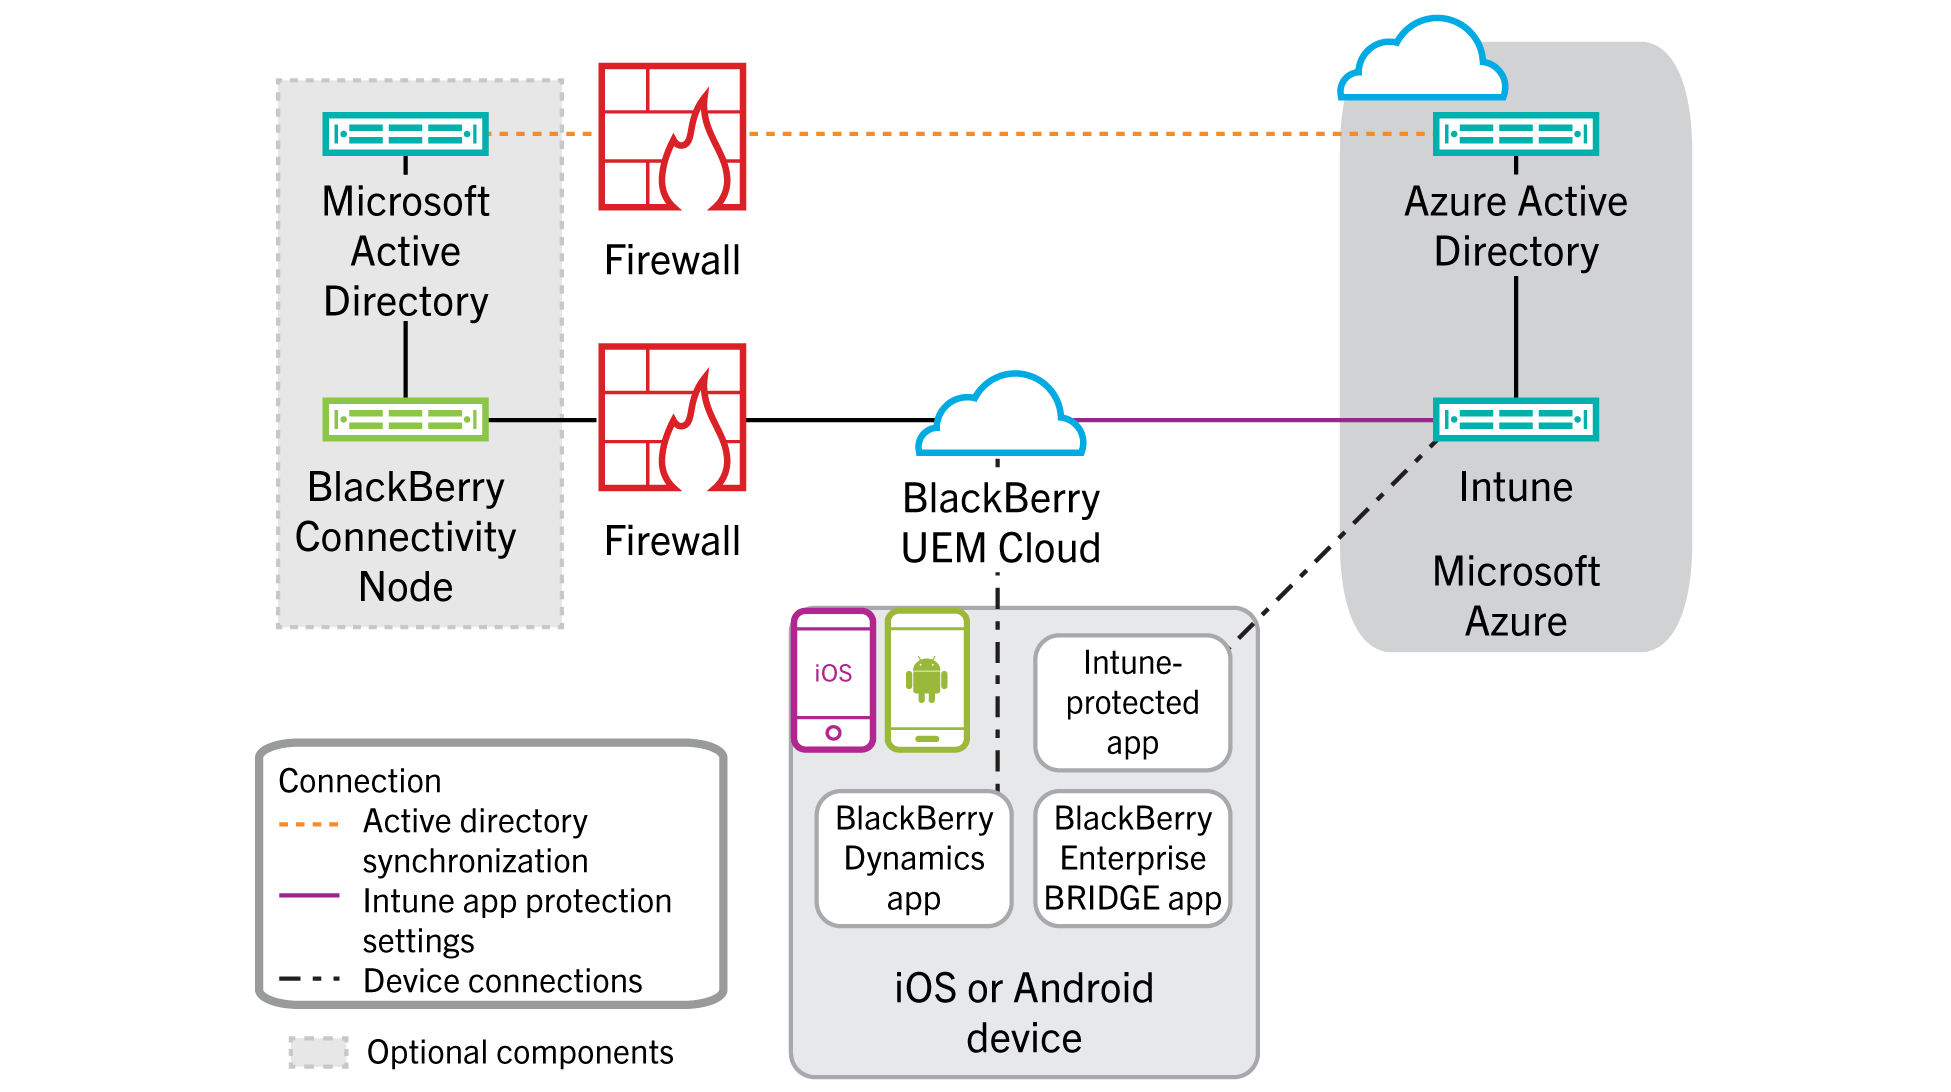 ARCH: BlackBerry Enterprise BRIDGE